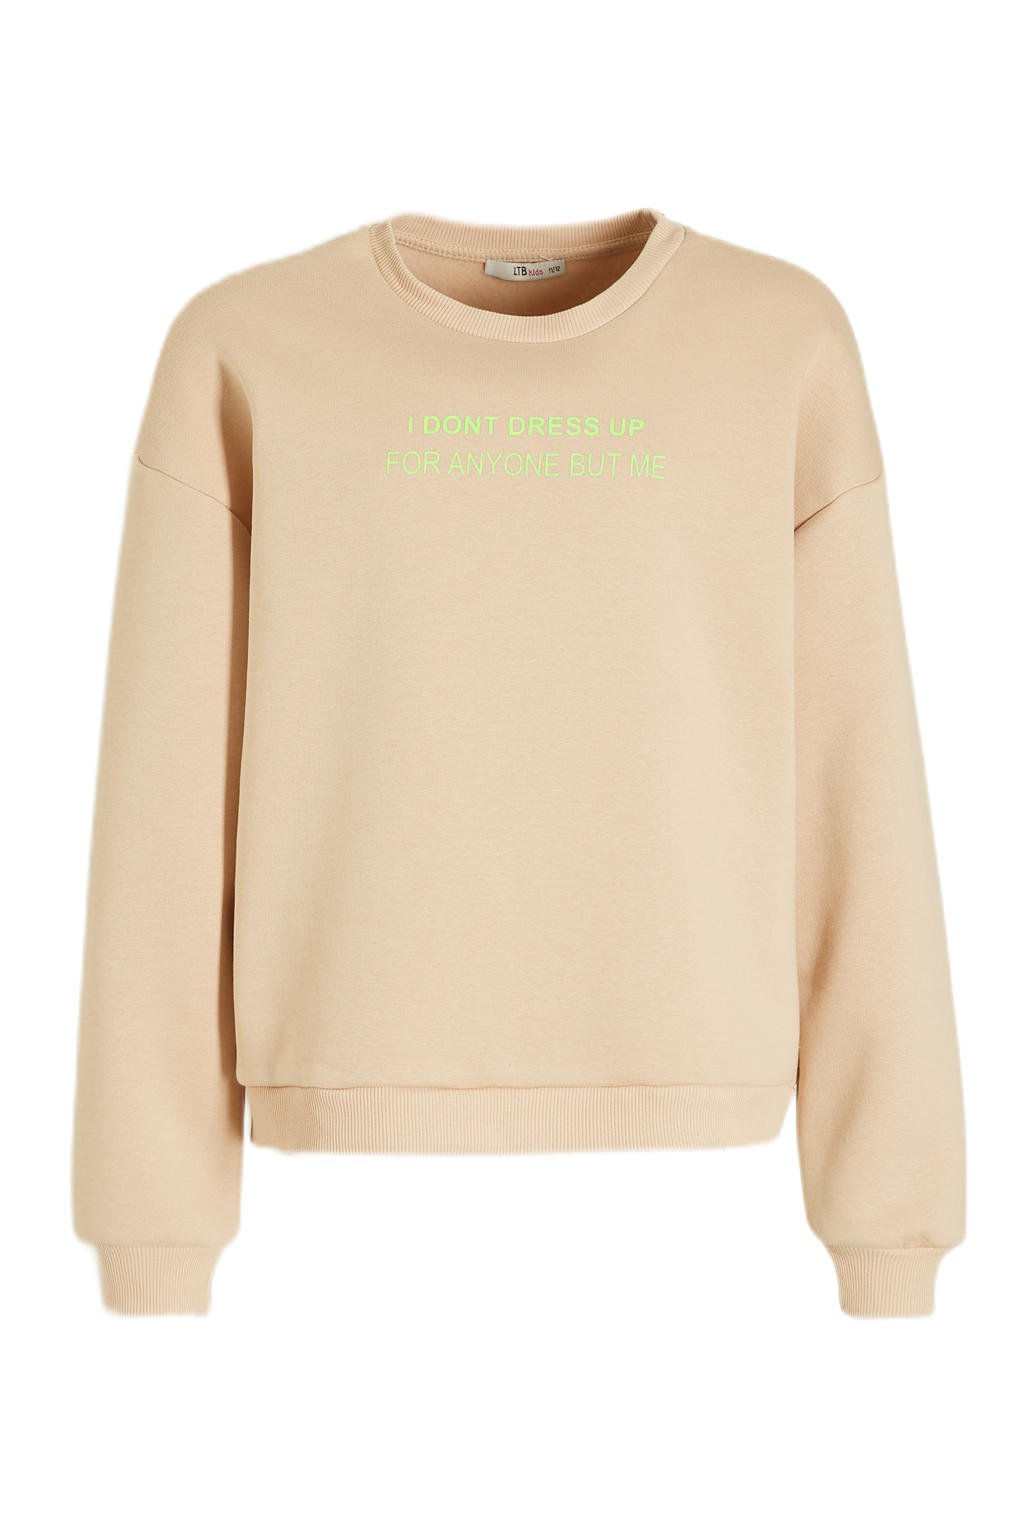 Zandkleurige meisjes LTB sweater Pafasa met tekst print, lange mouwen en ronde hals